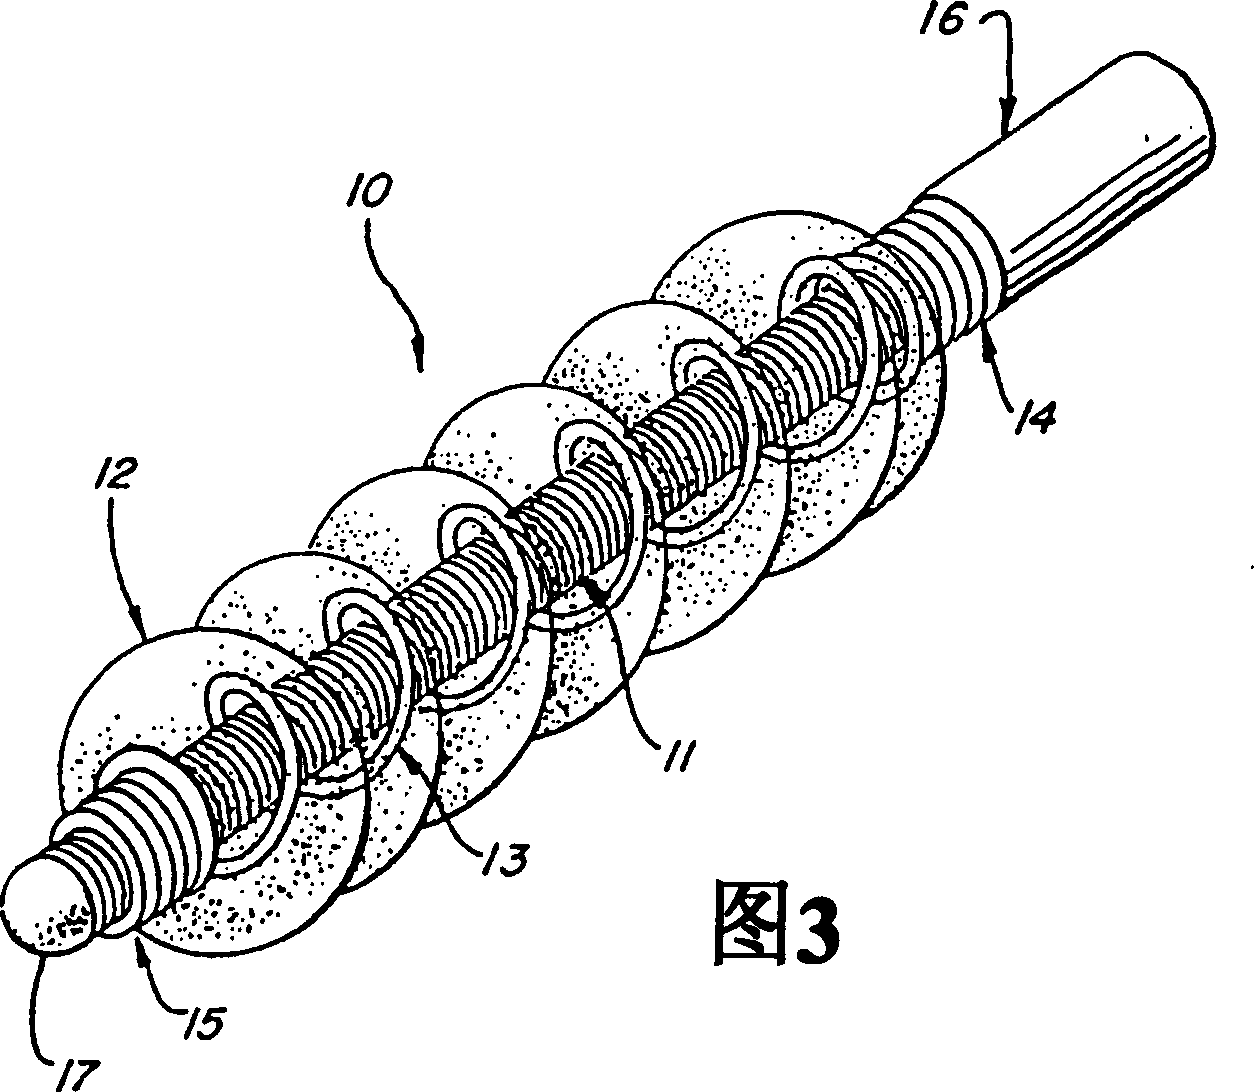 Three-part coaxial vaso-occlusive device